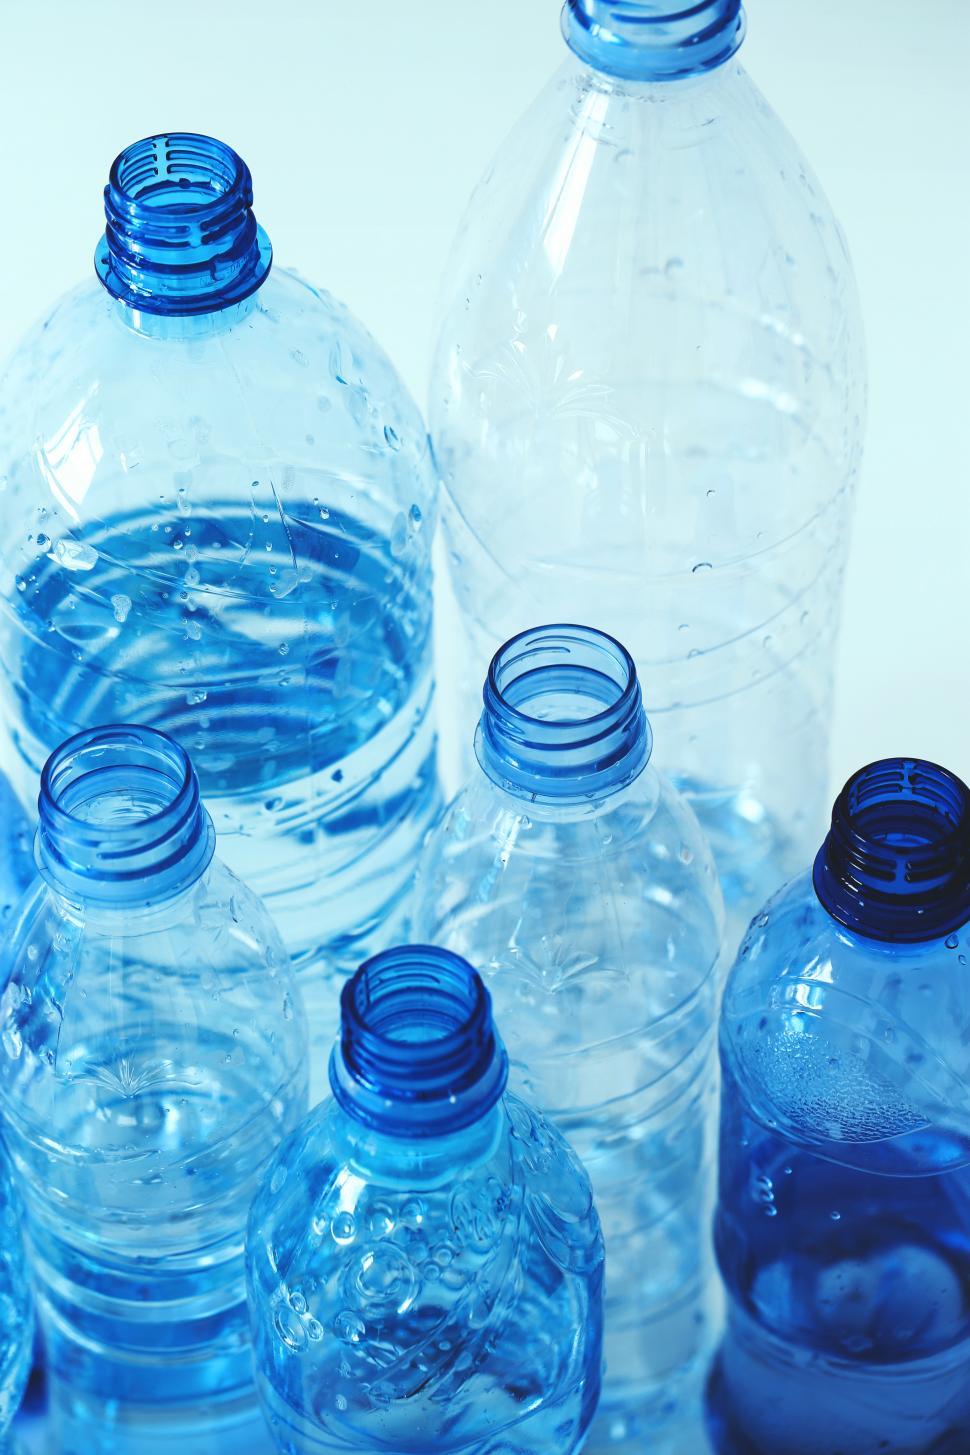 Free Image of Empty Plastic bottles 